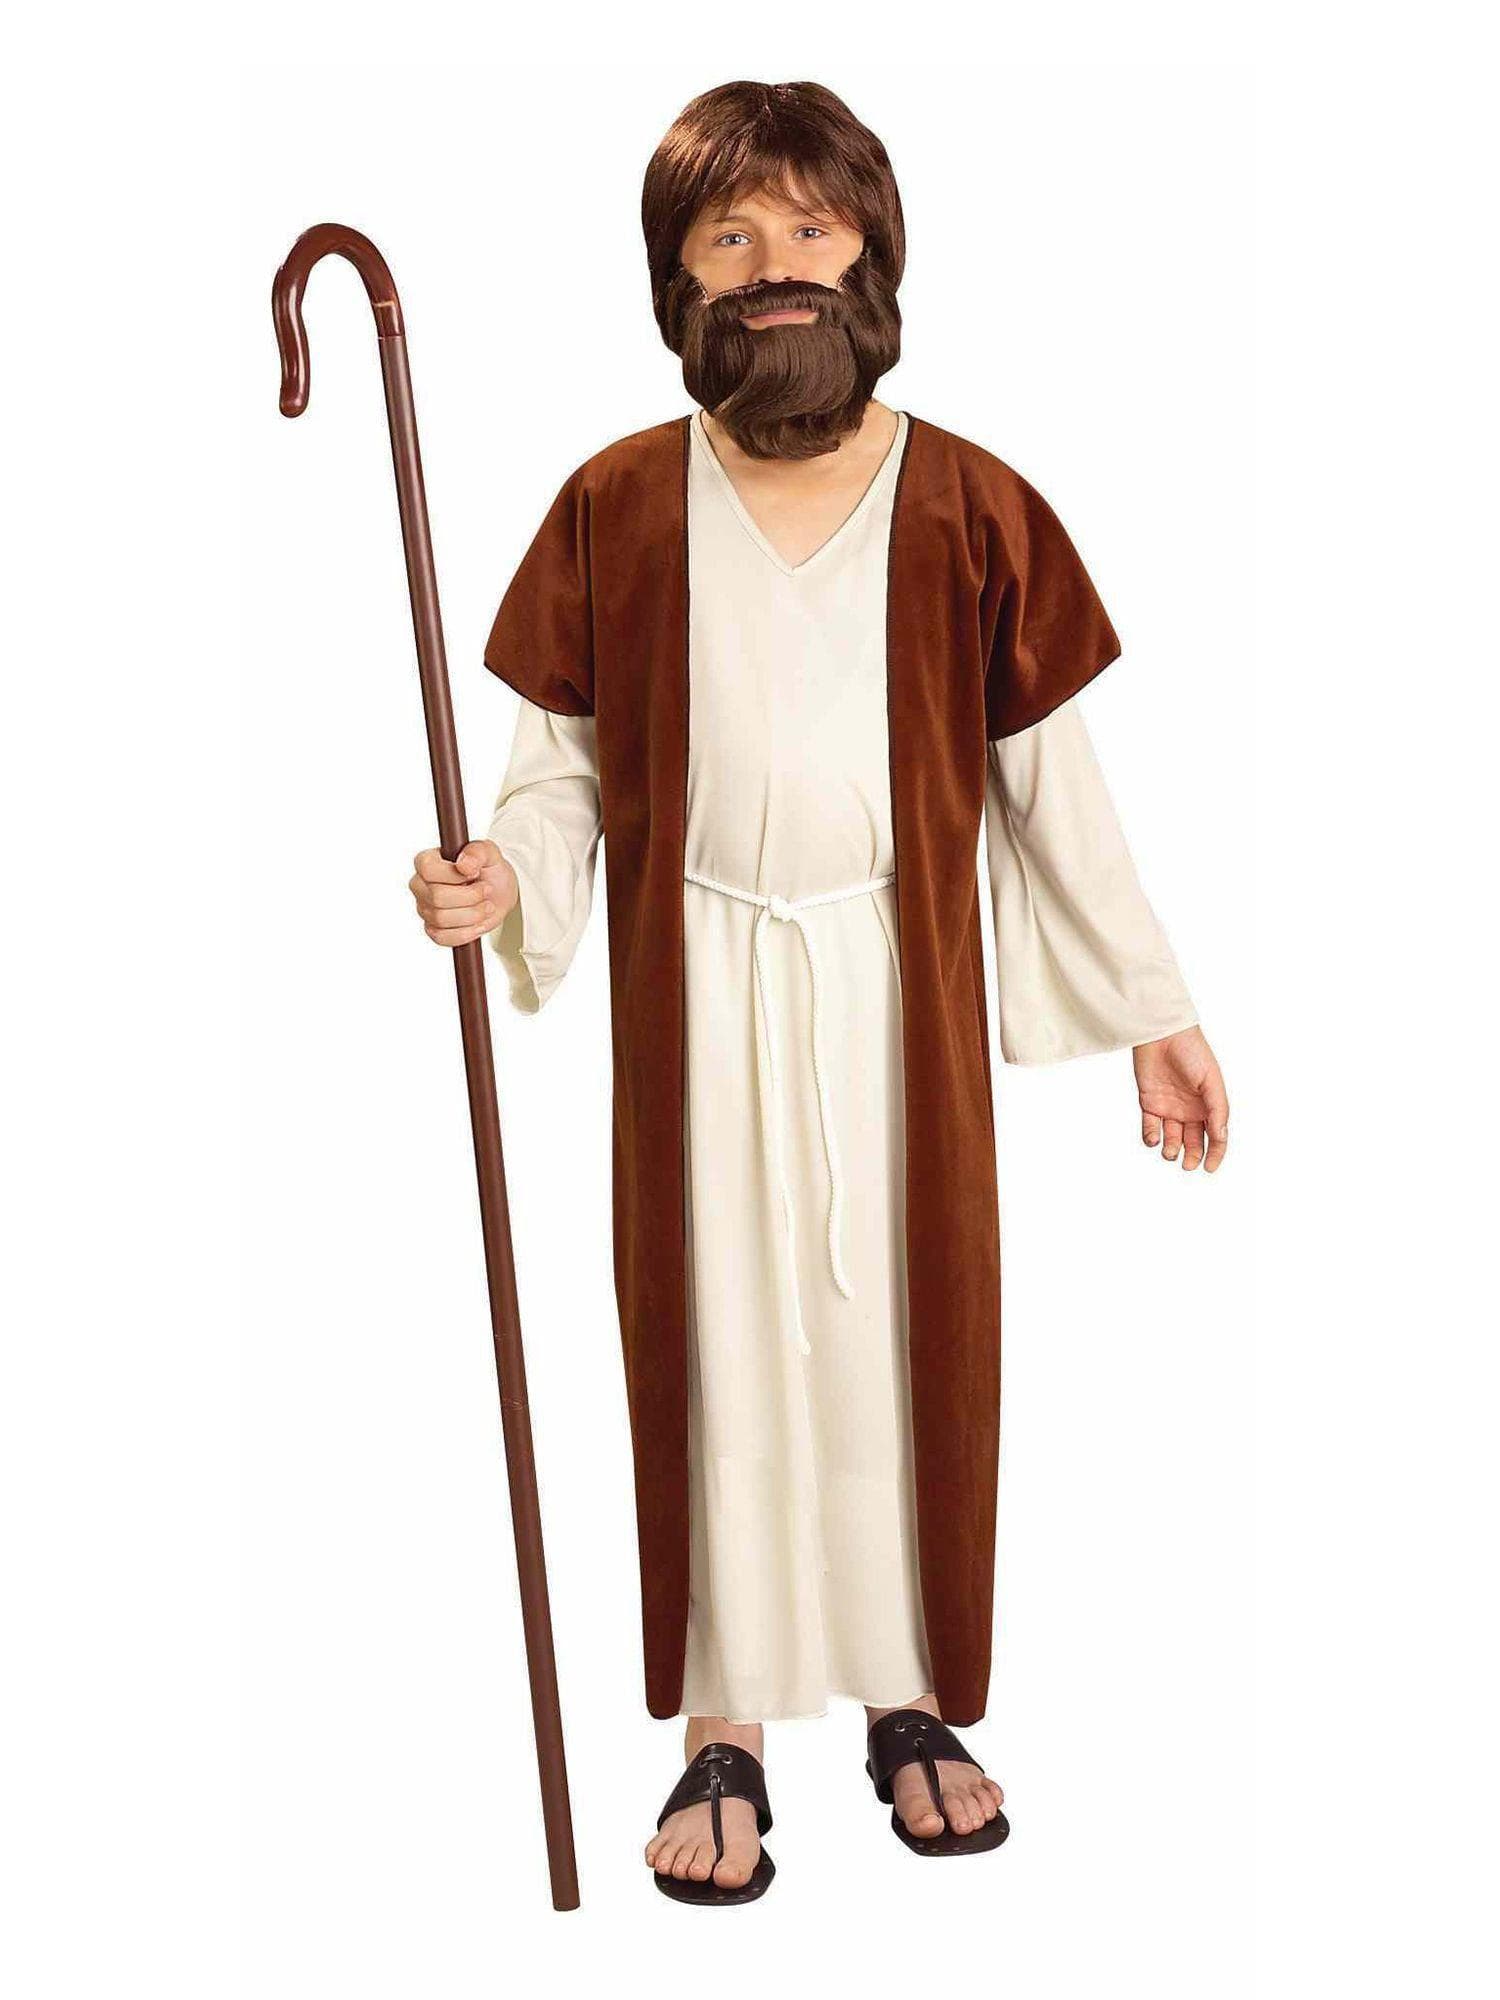 Boys' Shepherd Joseph Costume - costumes.com